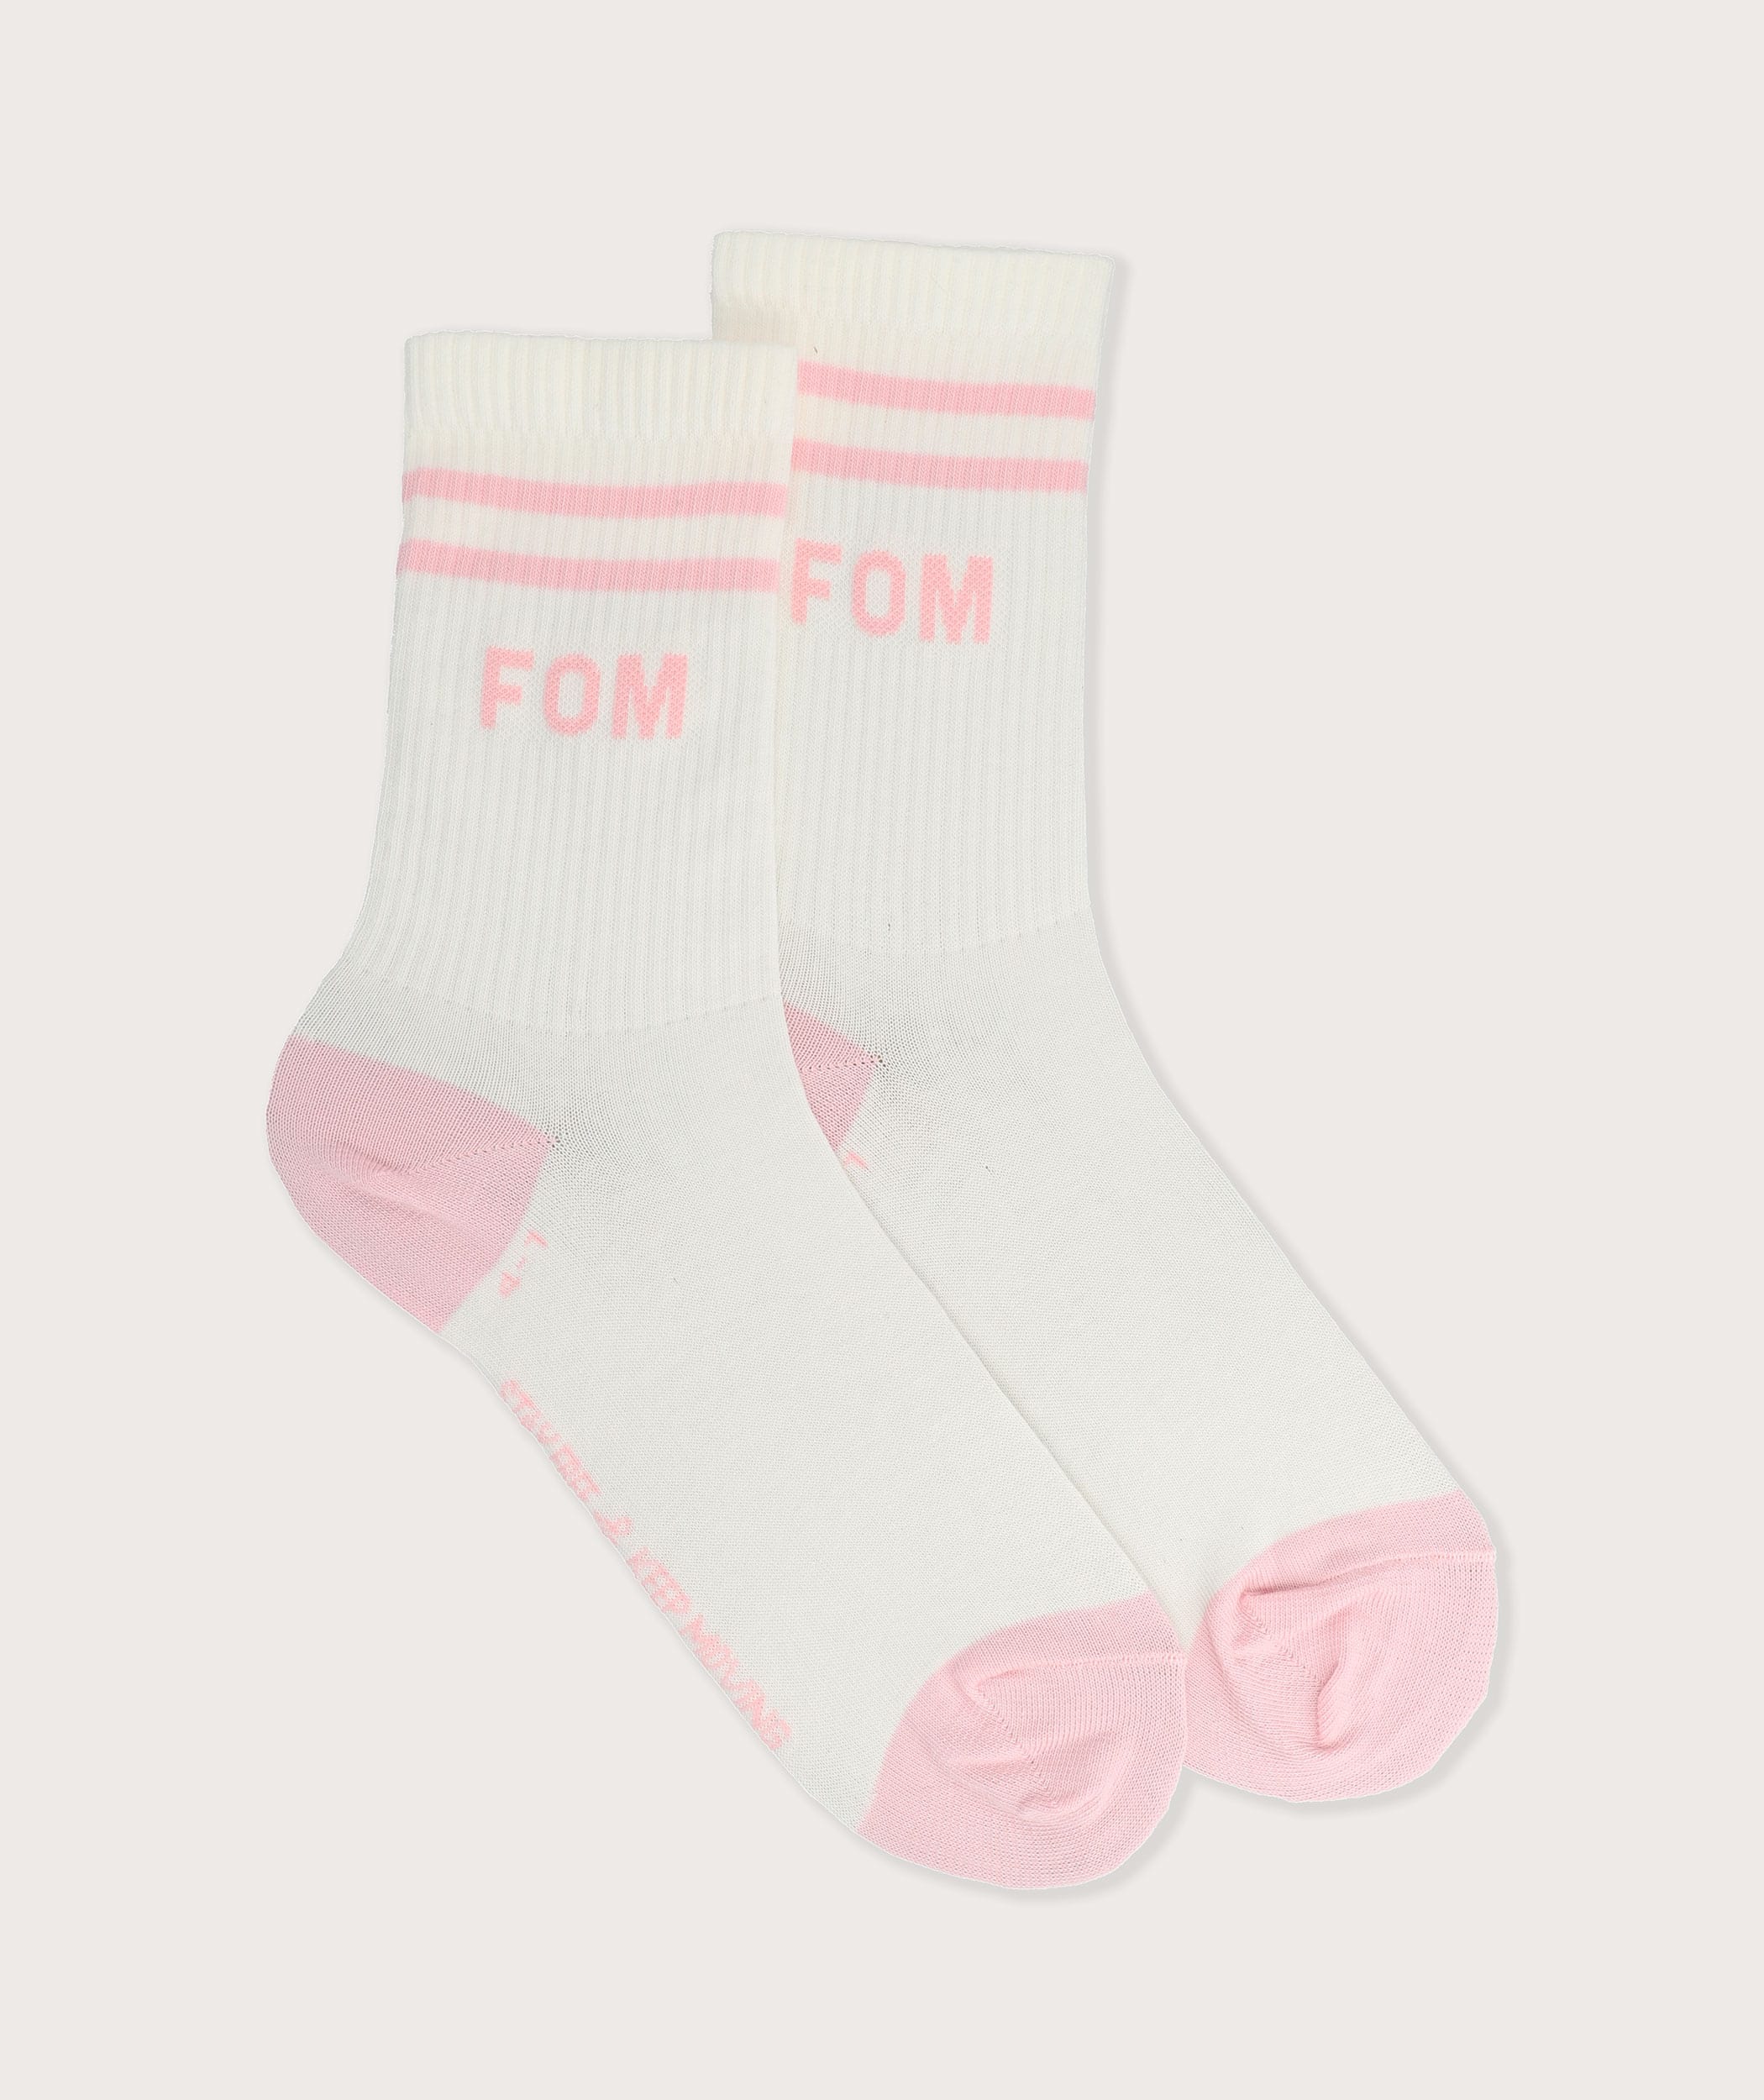 Socks FOM Crew Cream/ Blush (Size 4-7)